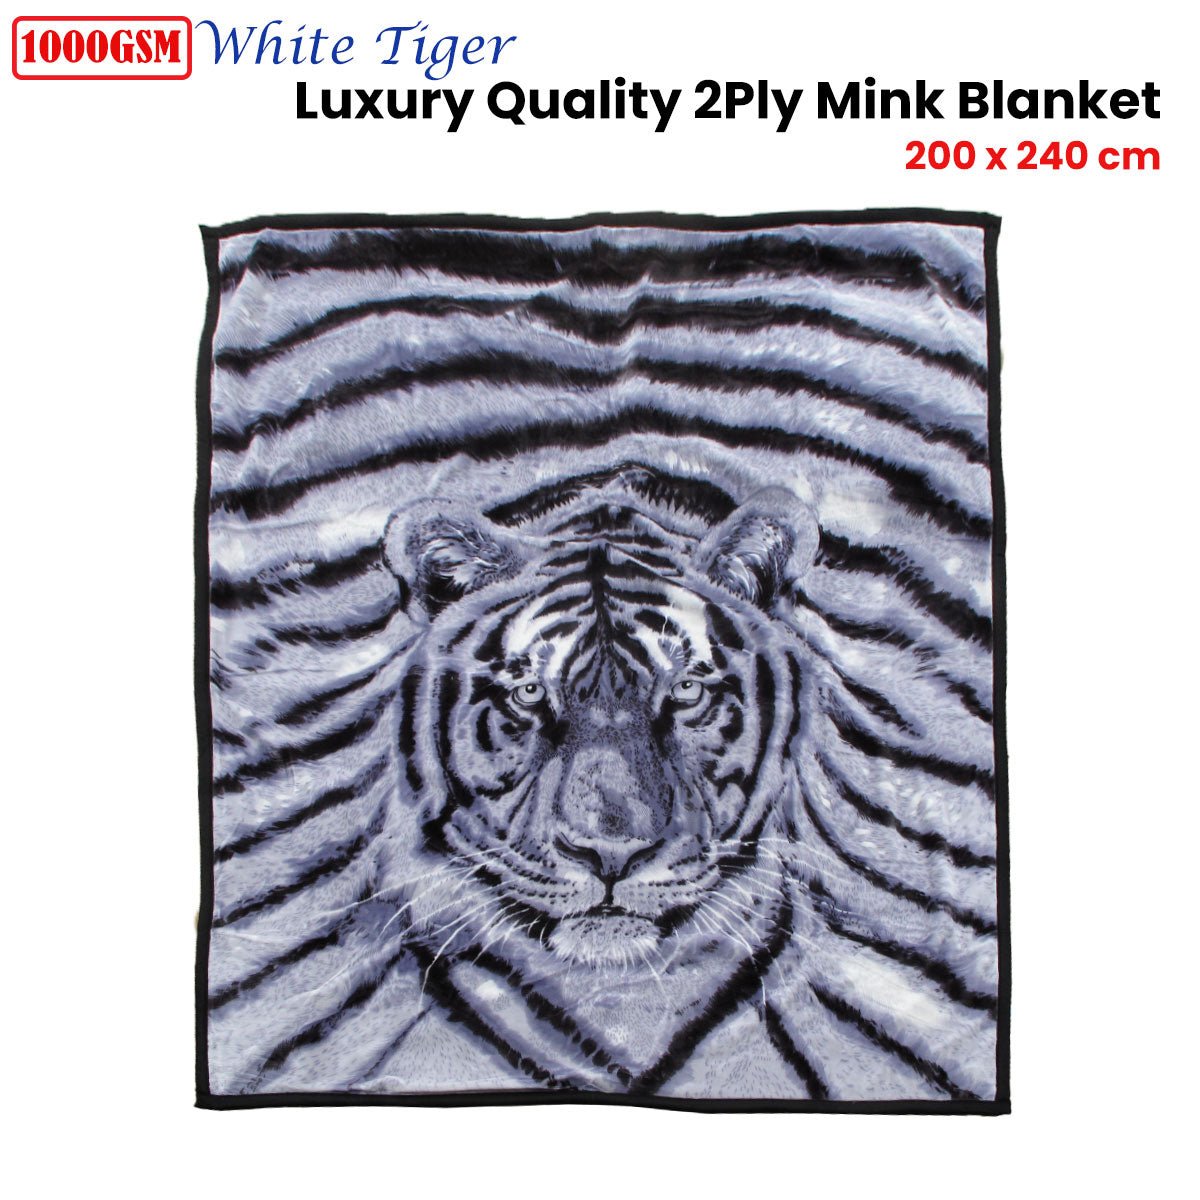 1000GSM White Tiger Luxury Quality 2 Ply Mink Blanket 200 x 240 cm - Newstart Furniture